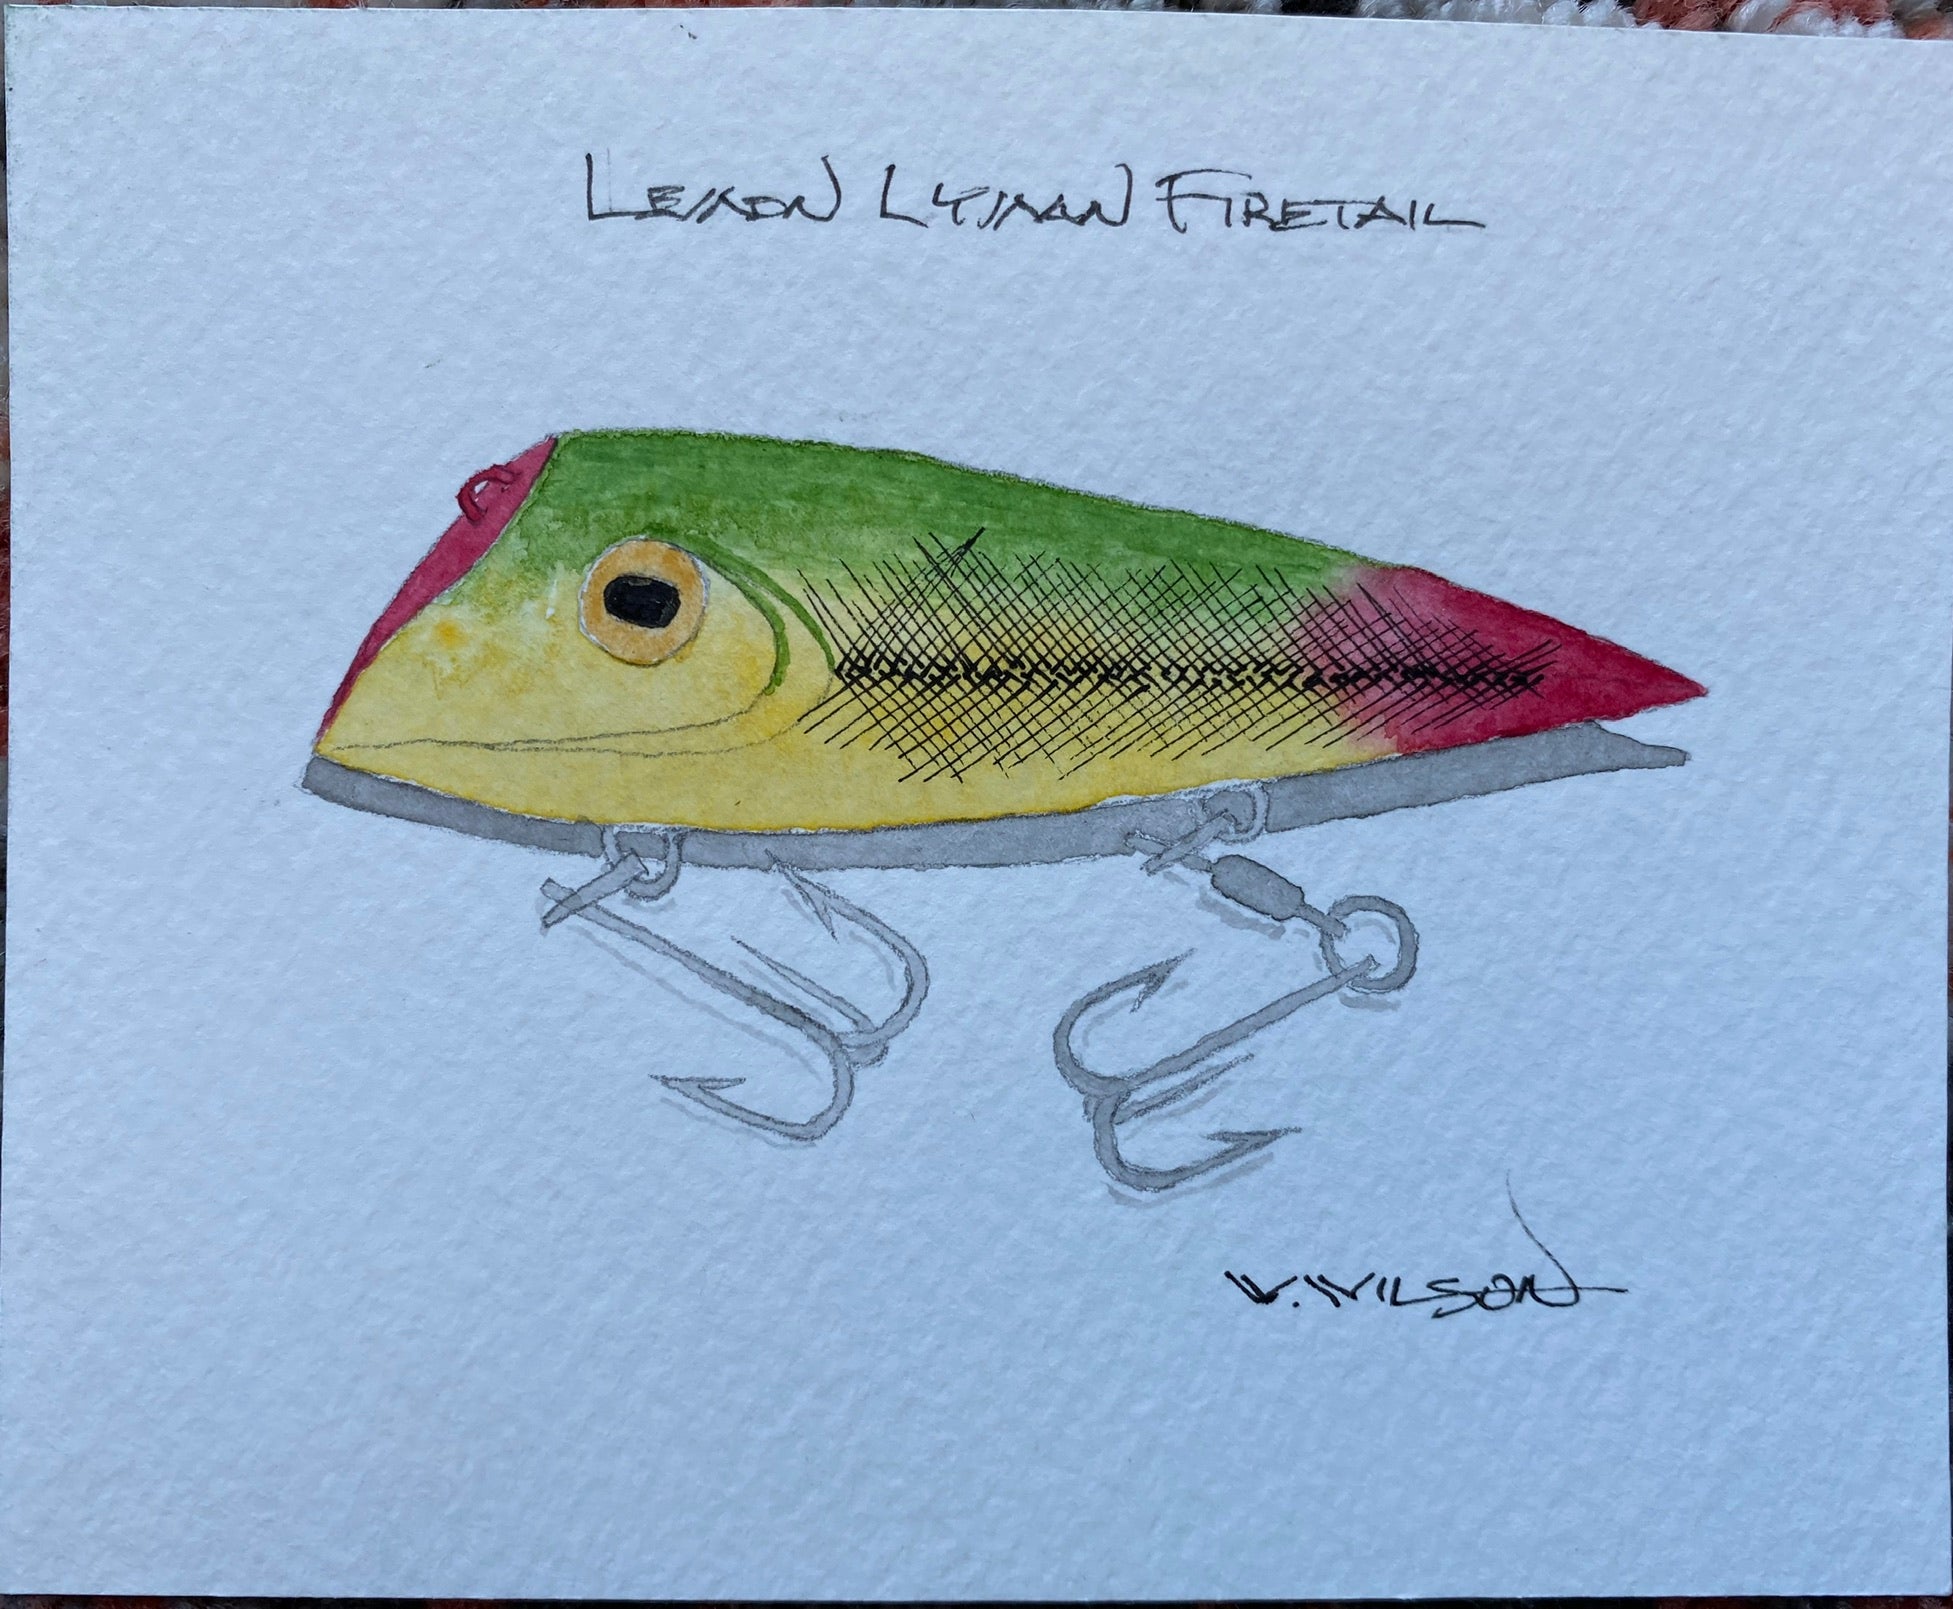 Lyman Lures - new design release - Lemon Lyman Firetail